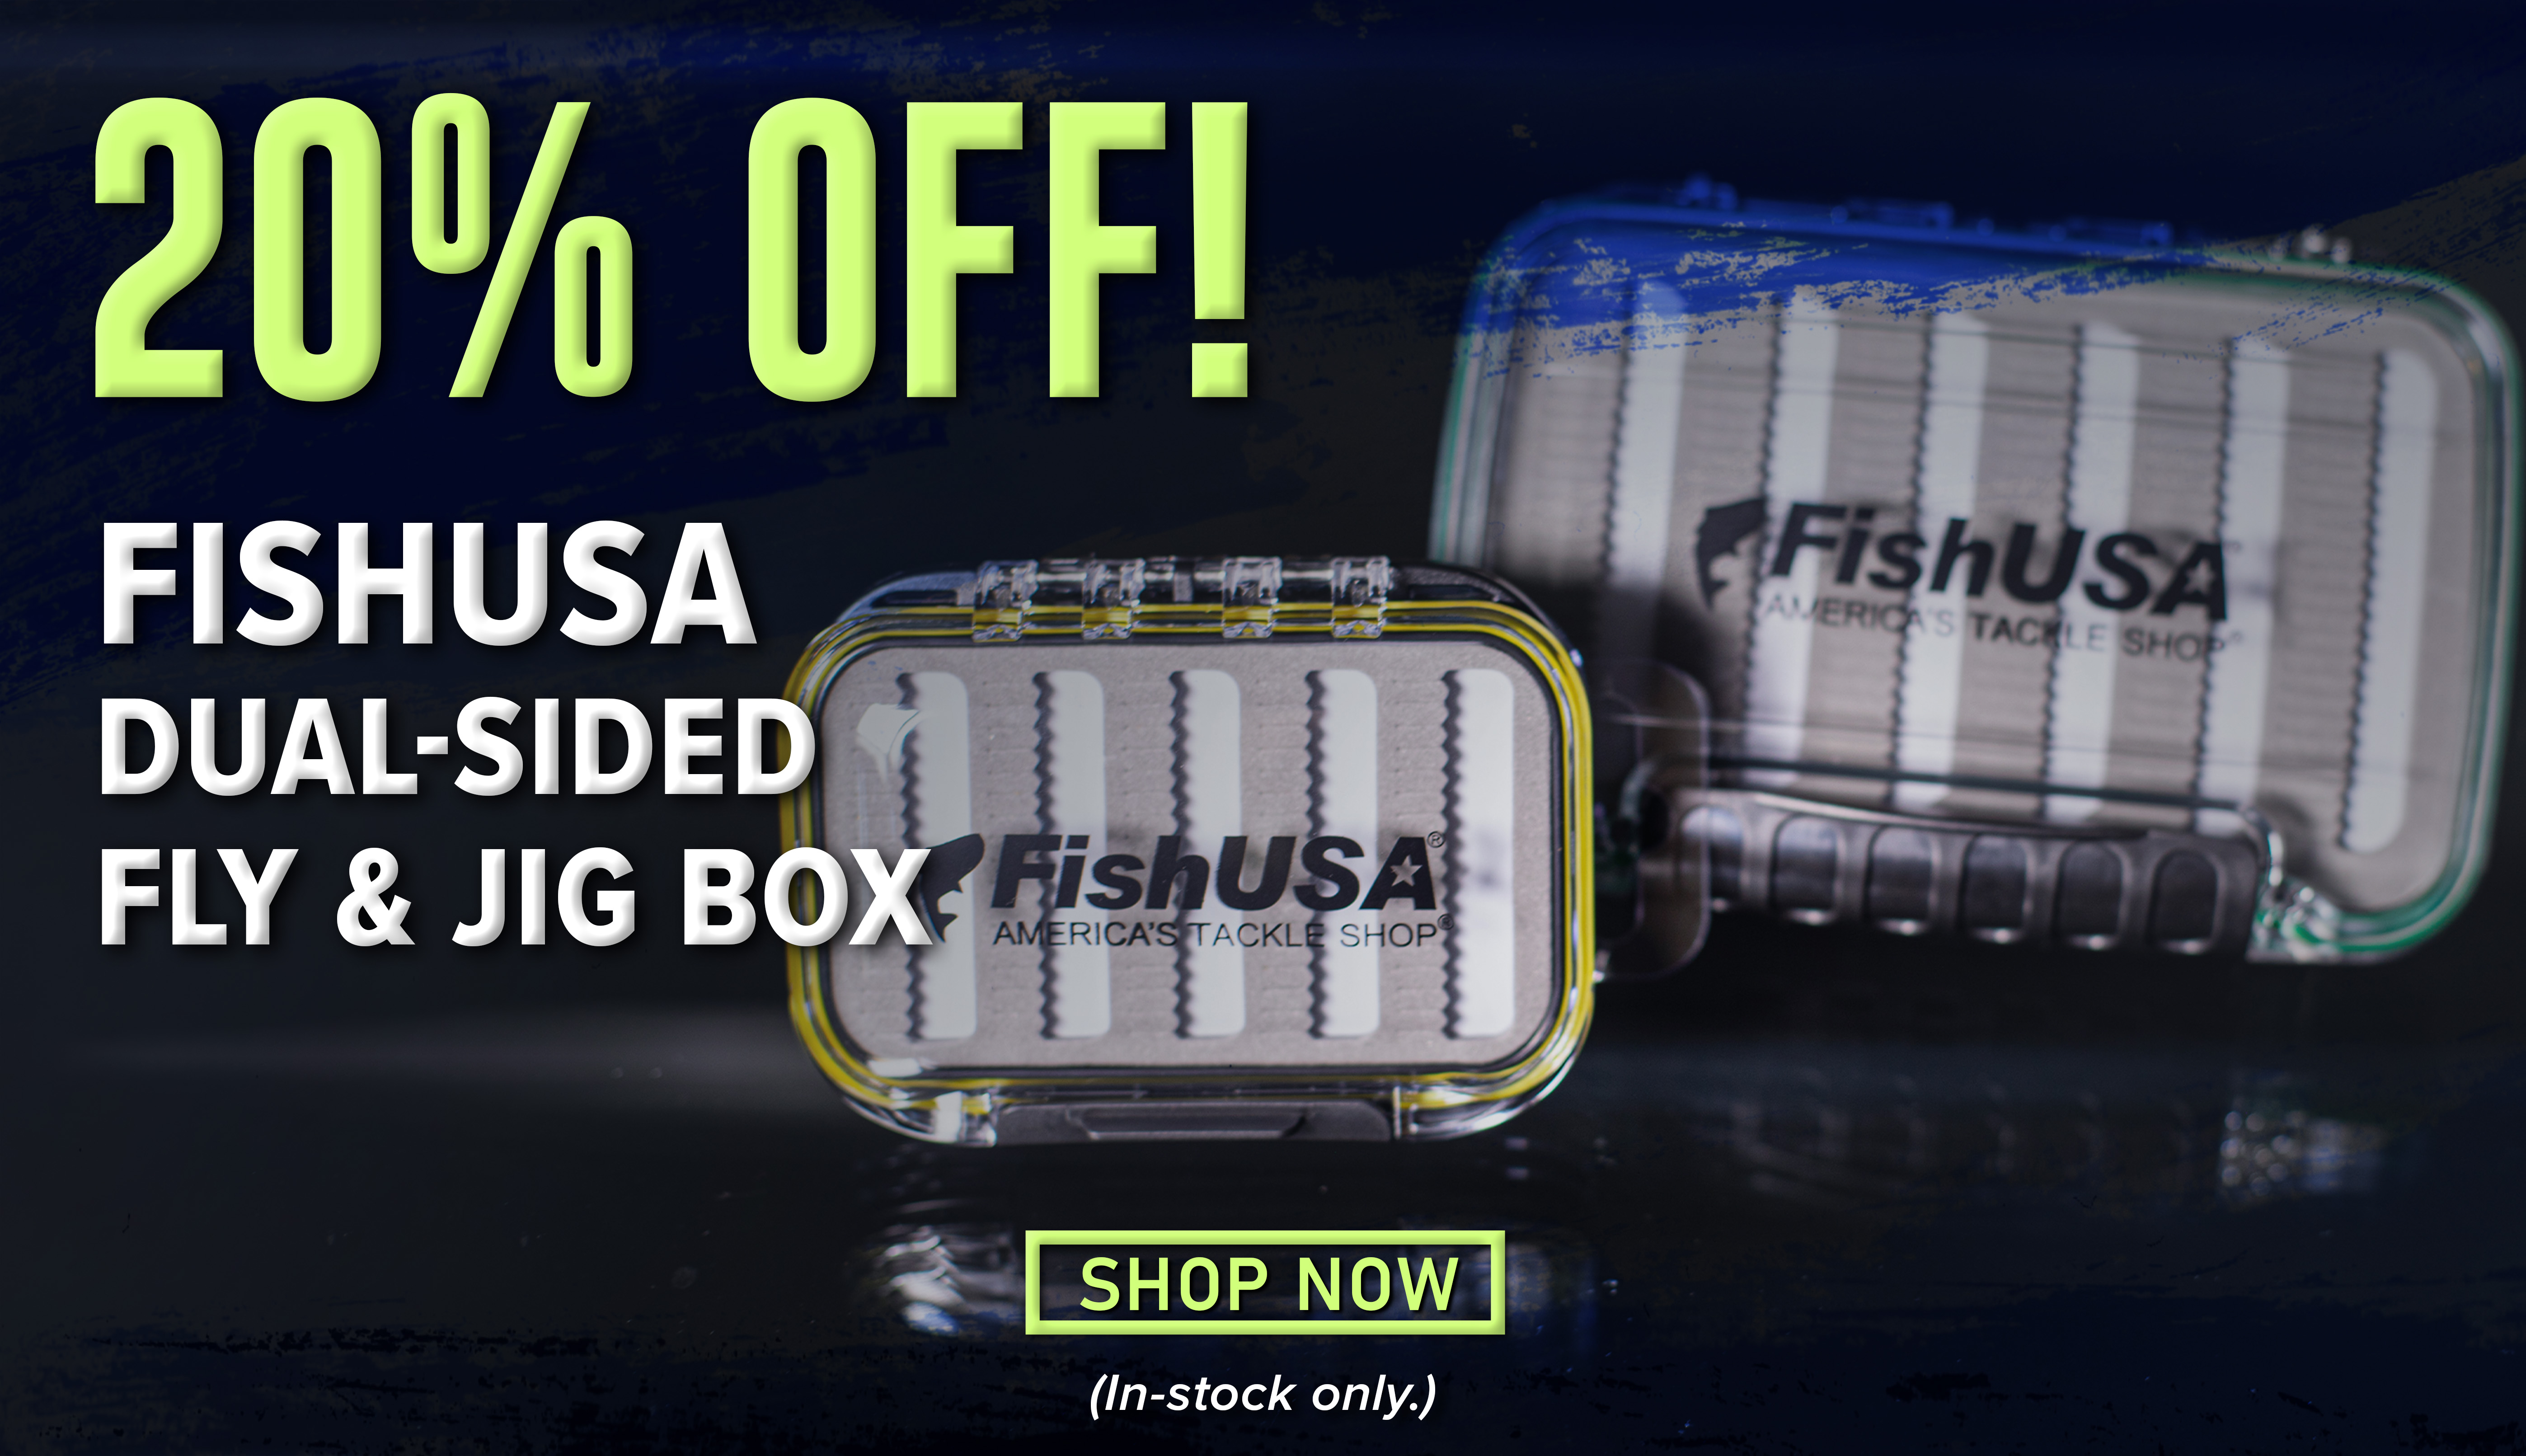 Buy 1, Get 1 Free Tungsten Ice Jigs! - Fish USA